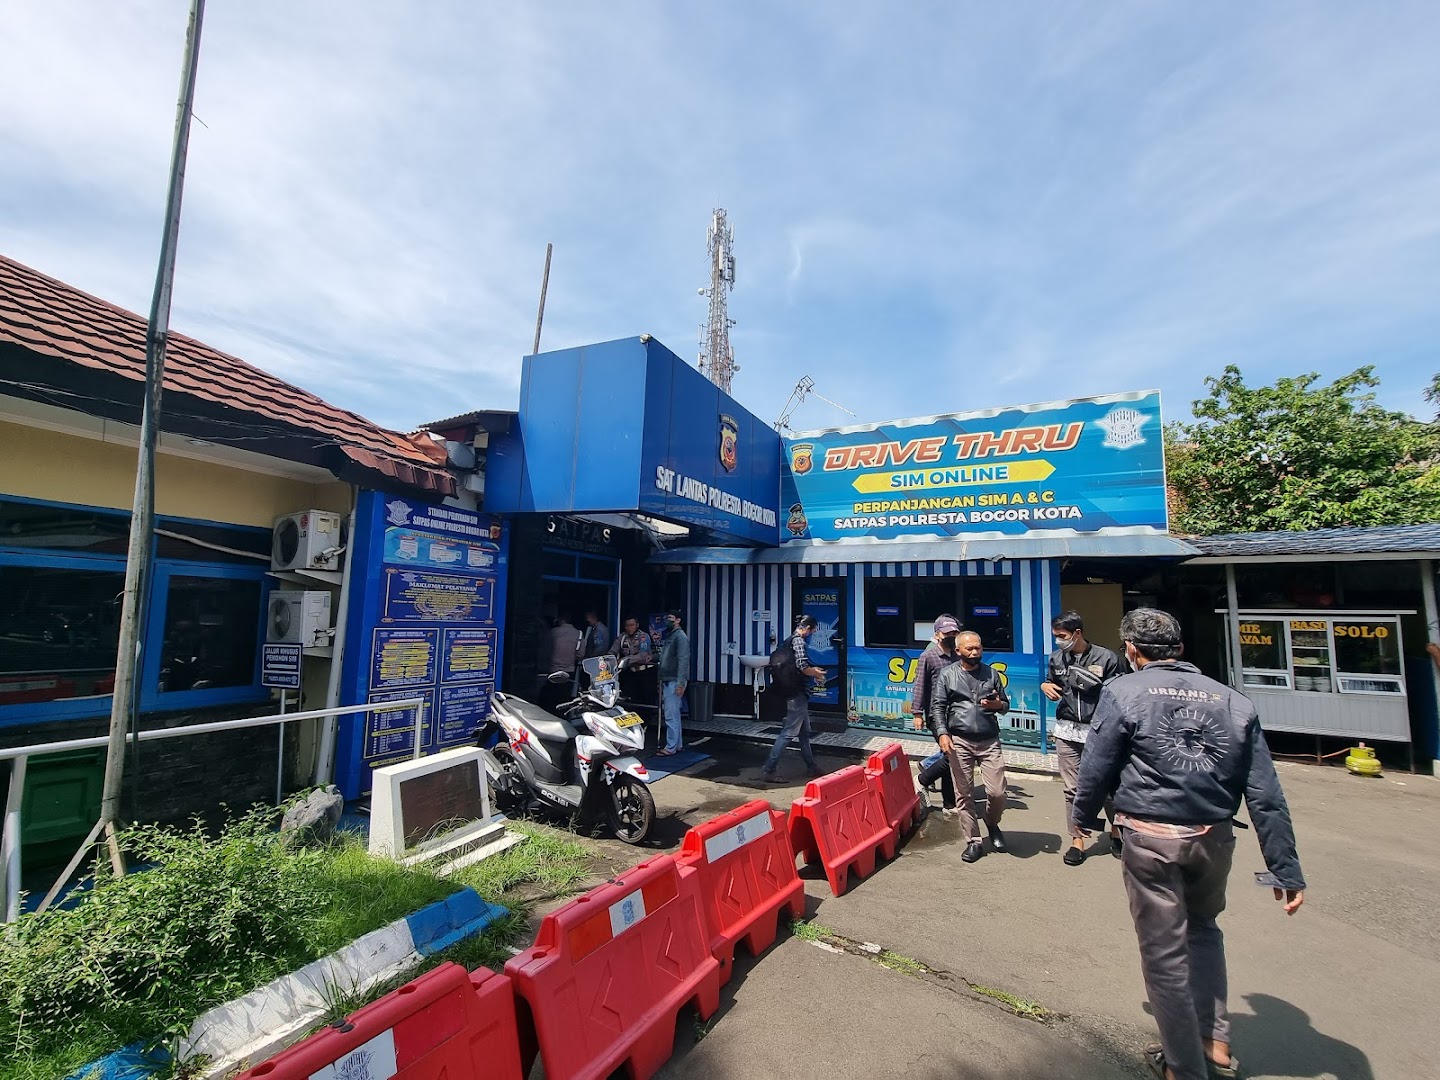 Polresta Bogor Kota Mako Kedunghalang Photo